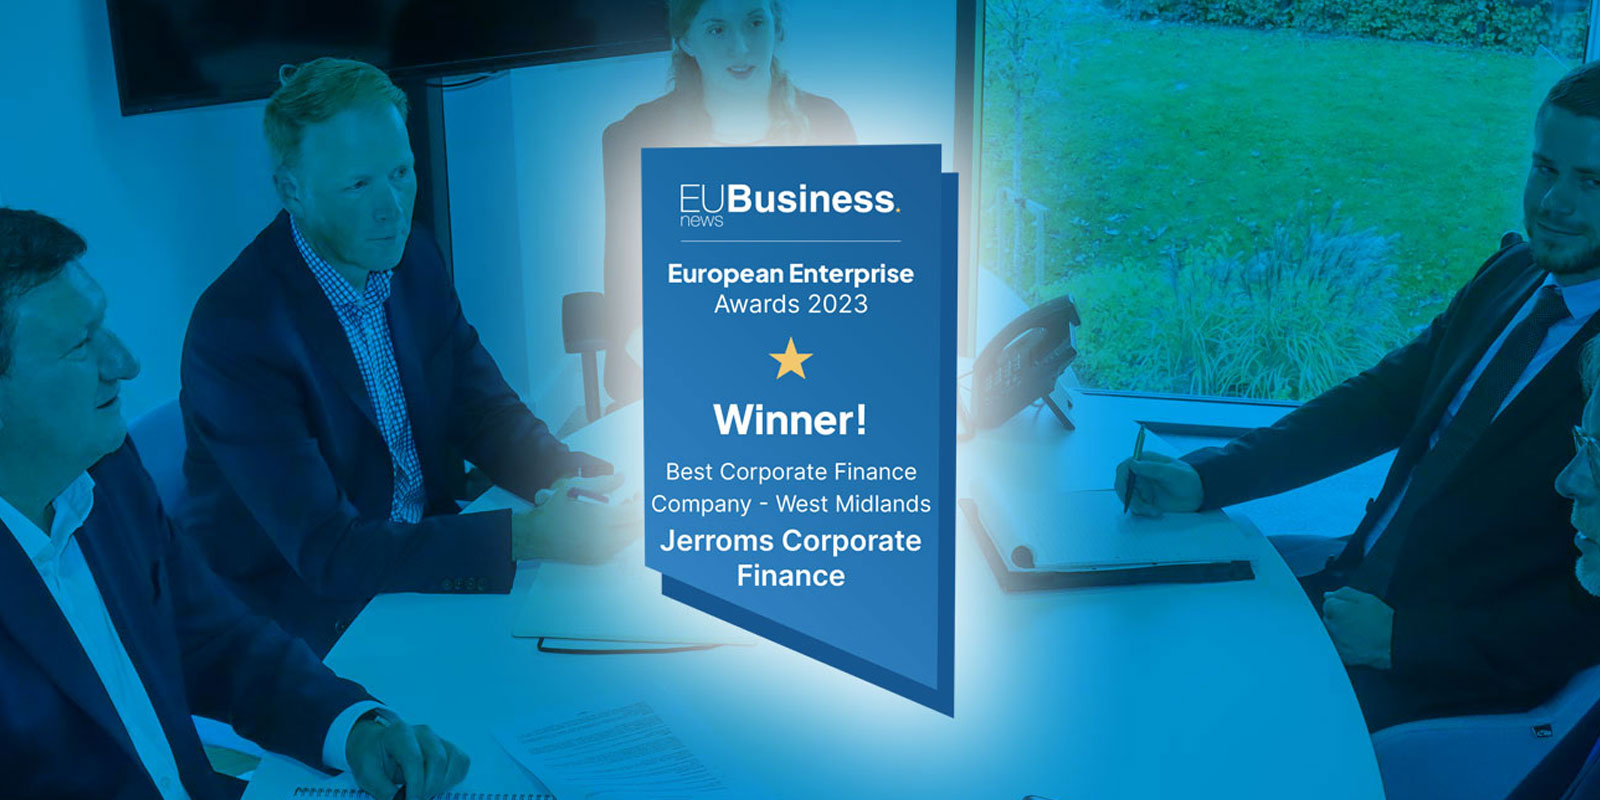 European Enterprise Awards 2023 Winners